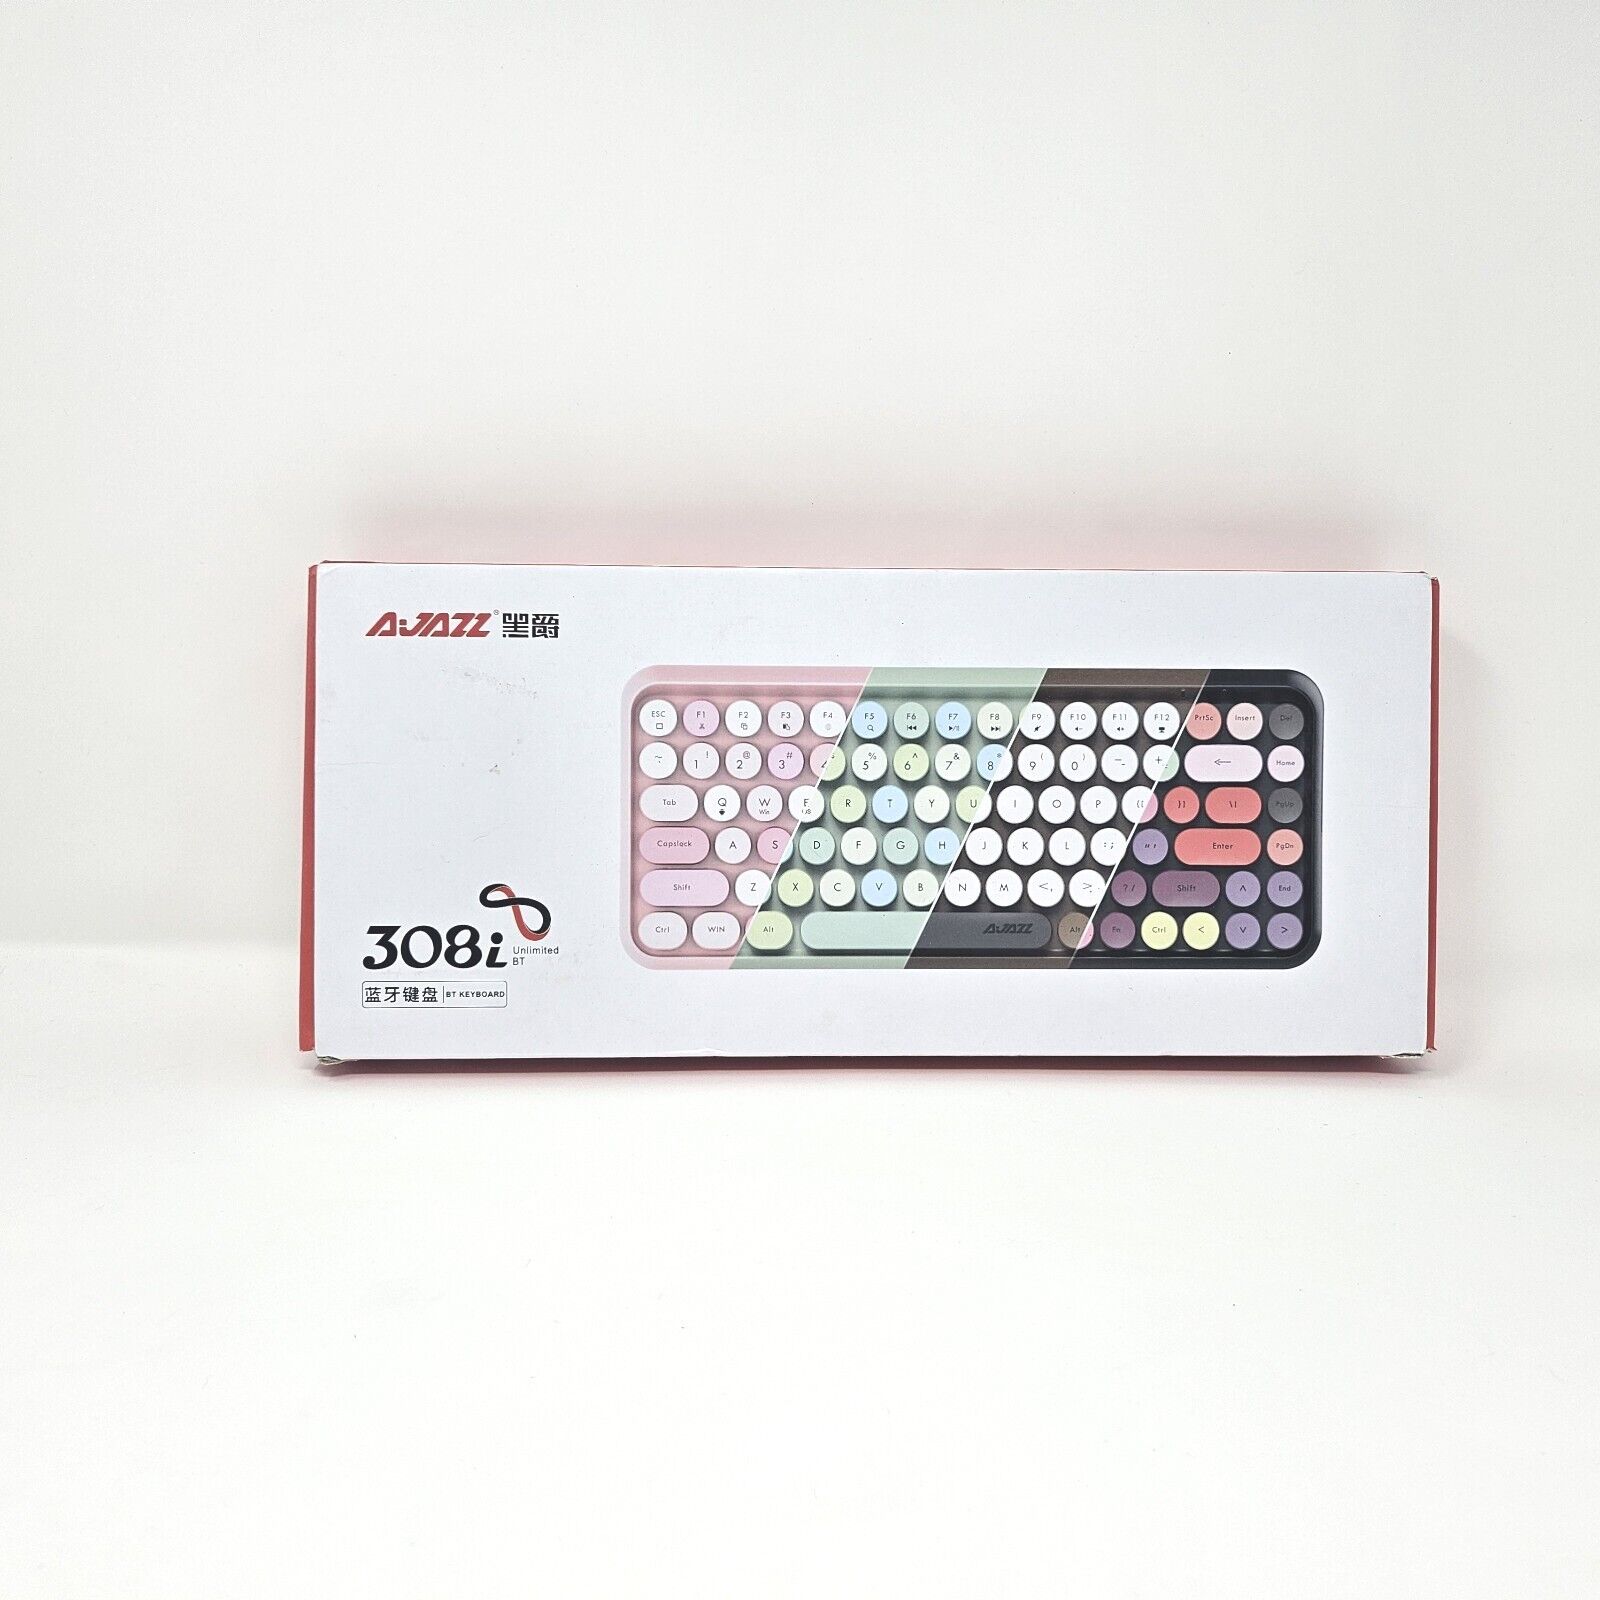 AJAZZ 308i Retro Wireless Keyboard,Bluetooth Silent Cute Computer Keyboard New